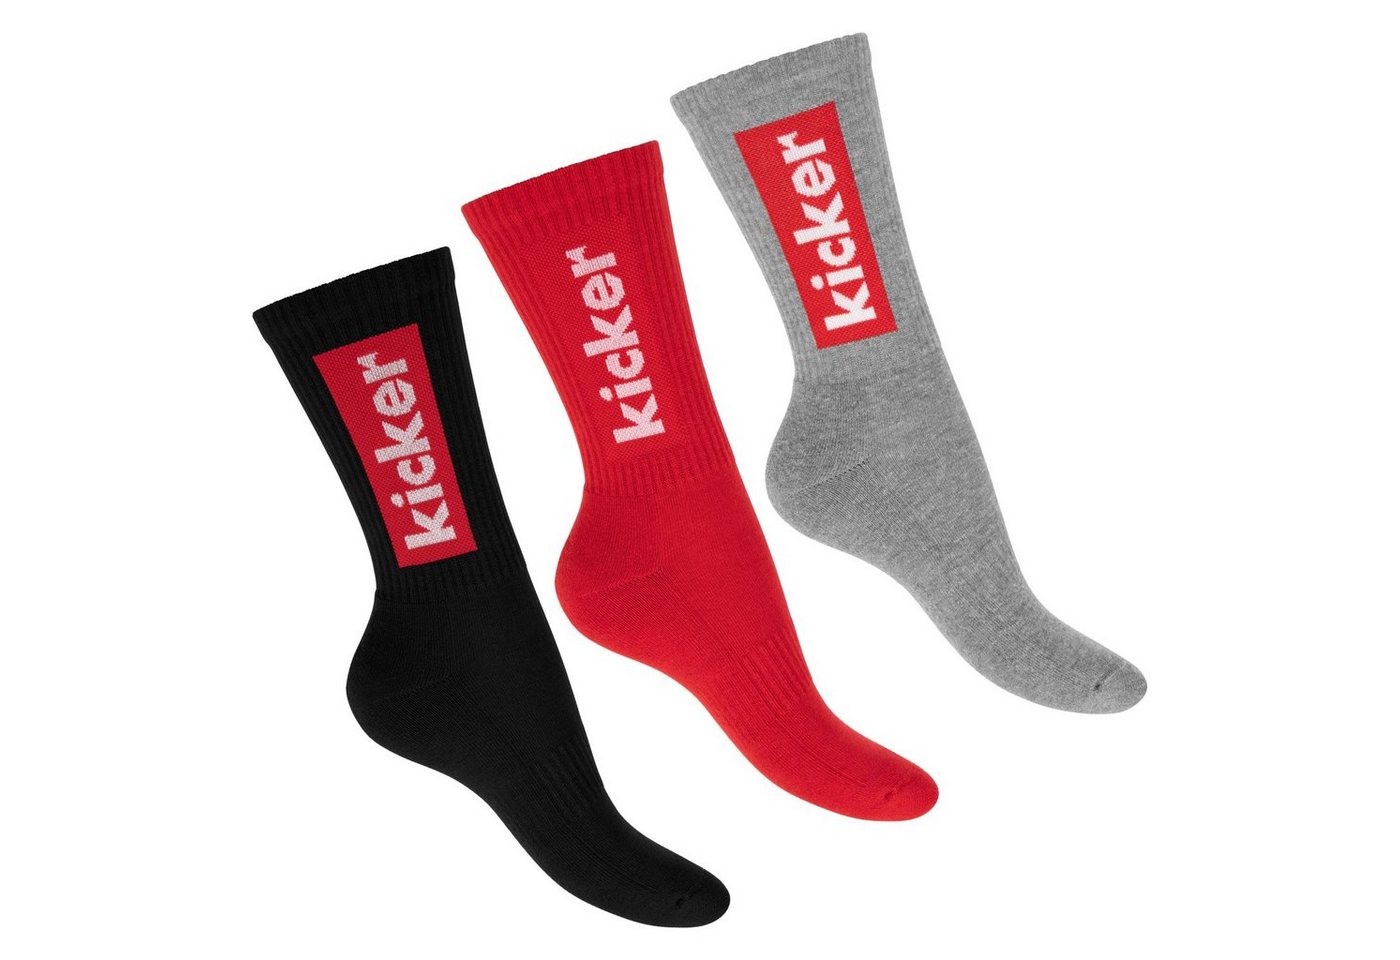 Kicker Tennissocken kicker Damen & Herren Crew Socks (3 Paar) Schwarz Rot Grau 35-38 (3-Paar) von Kicker